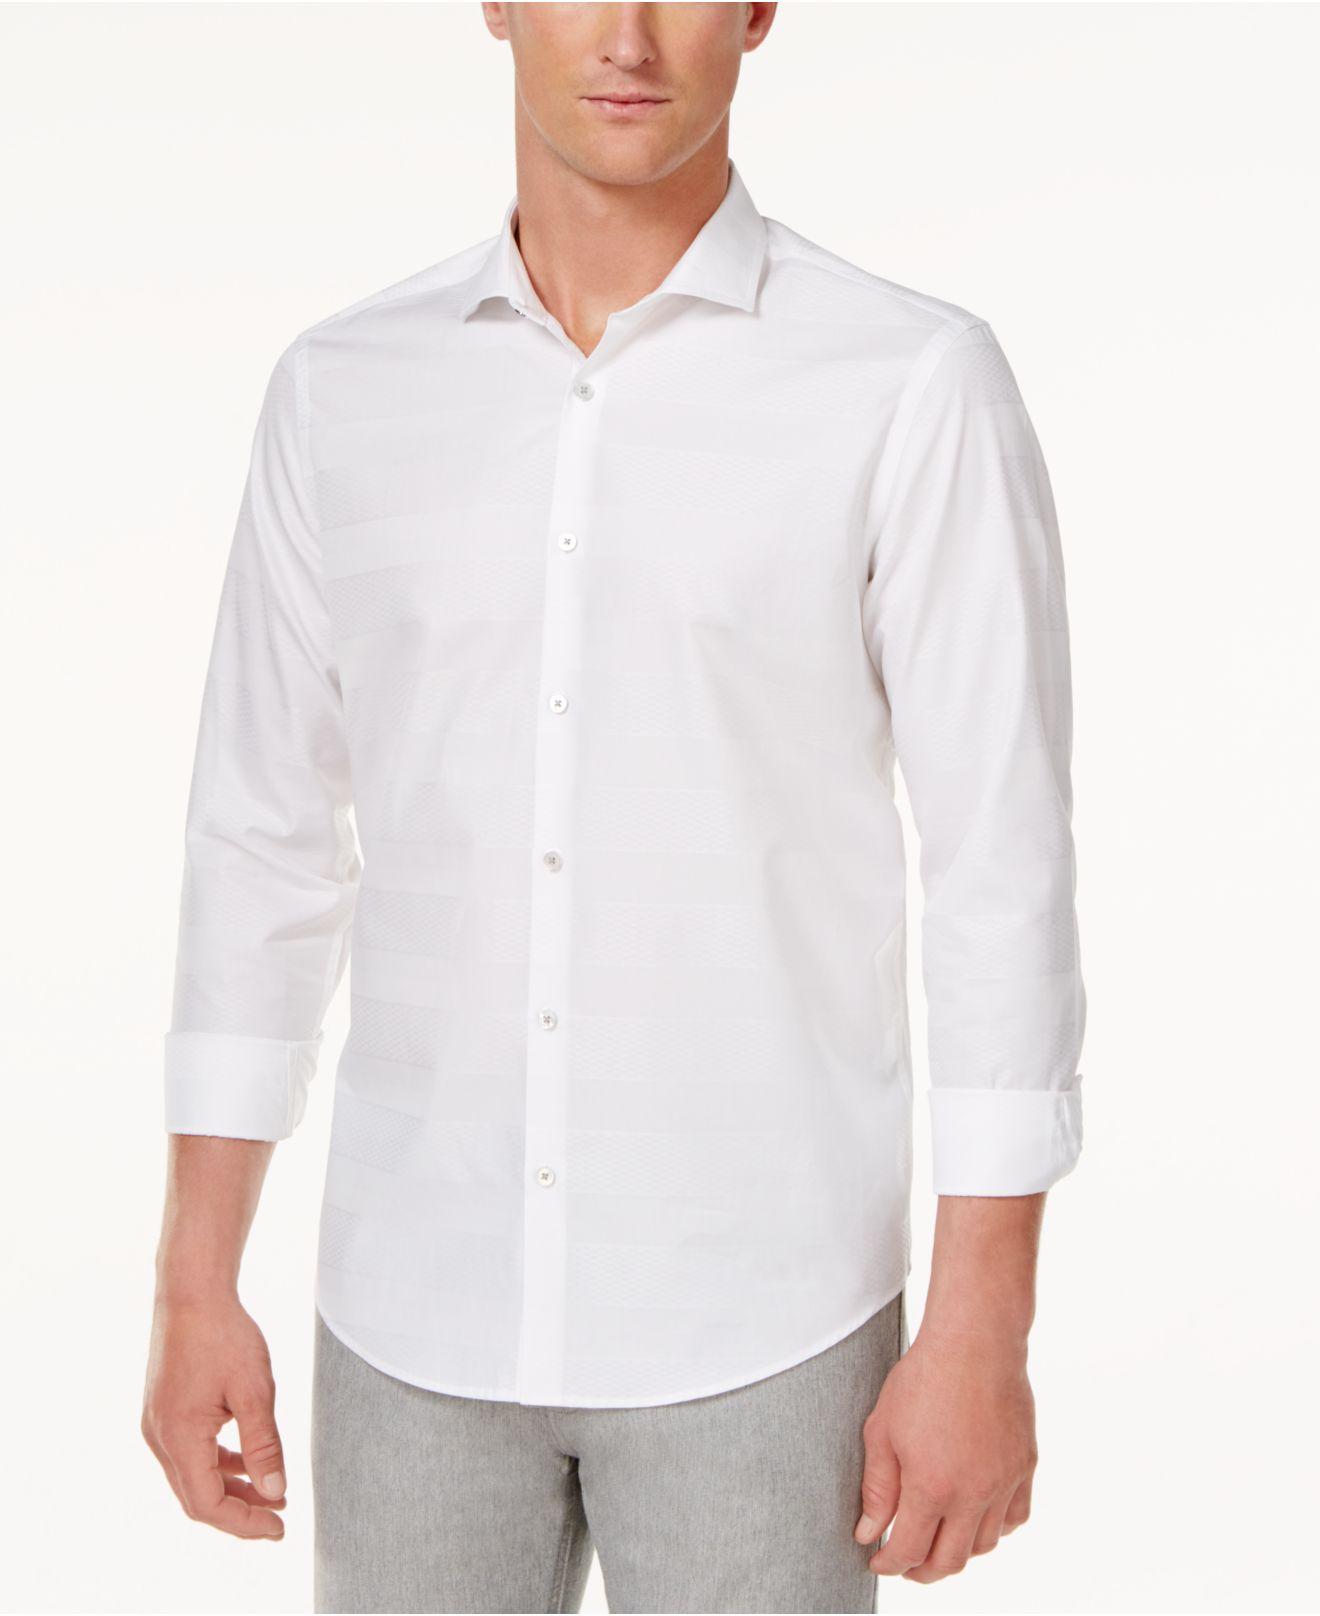 Lyst - Alfani Men's Textured-stripe Cotton Shirt in White for Men